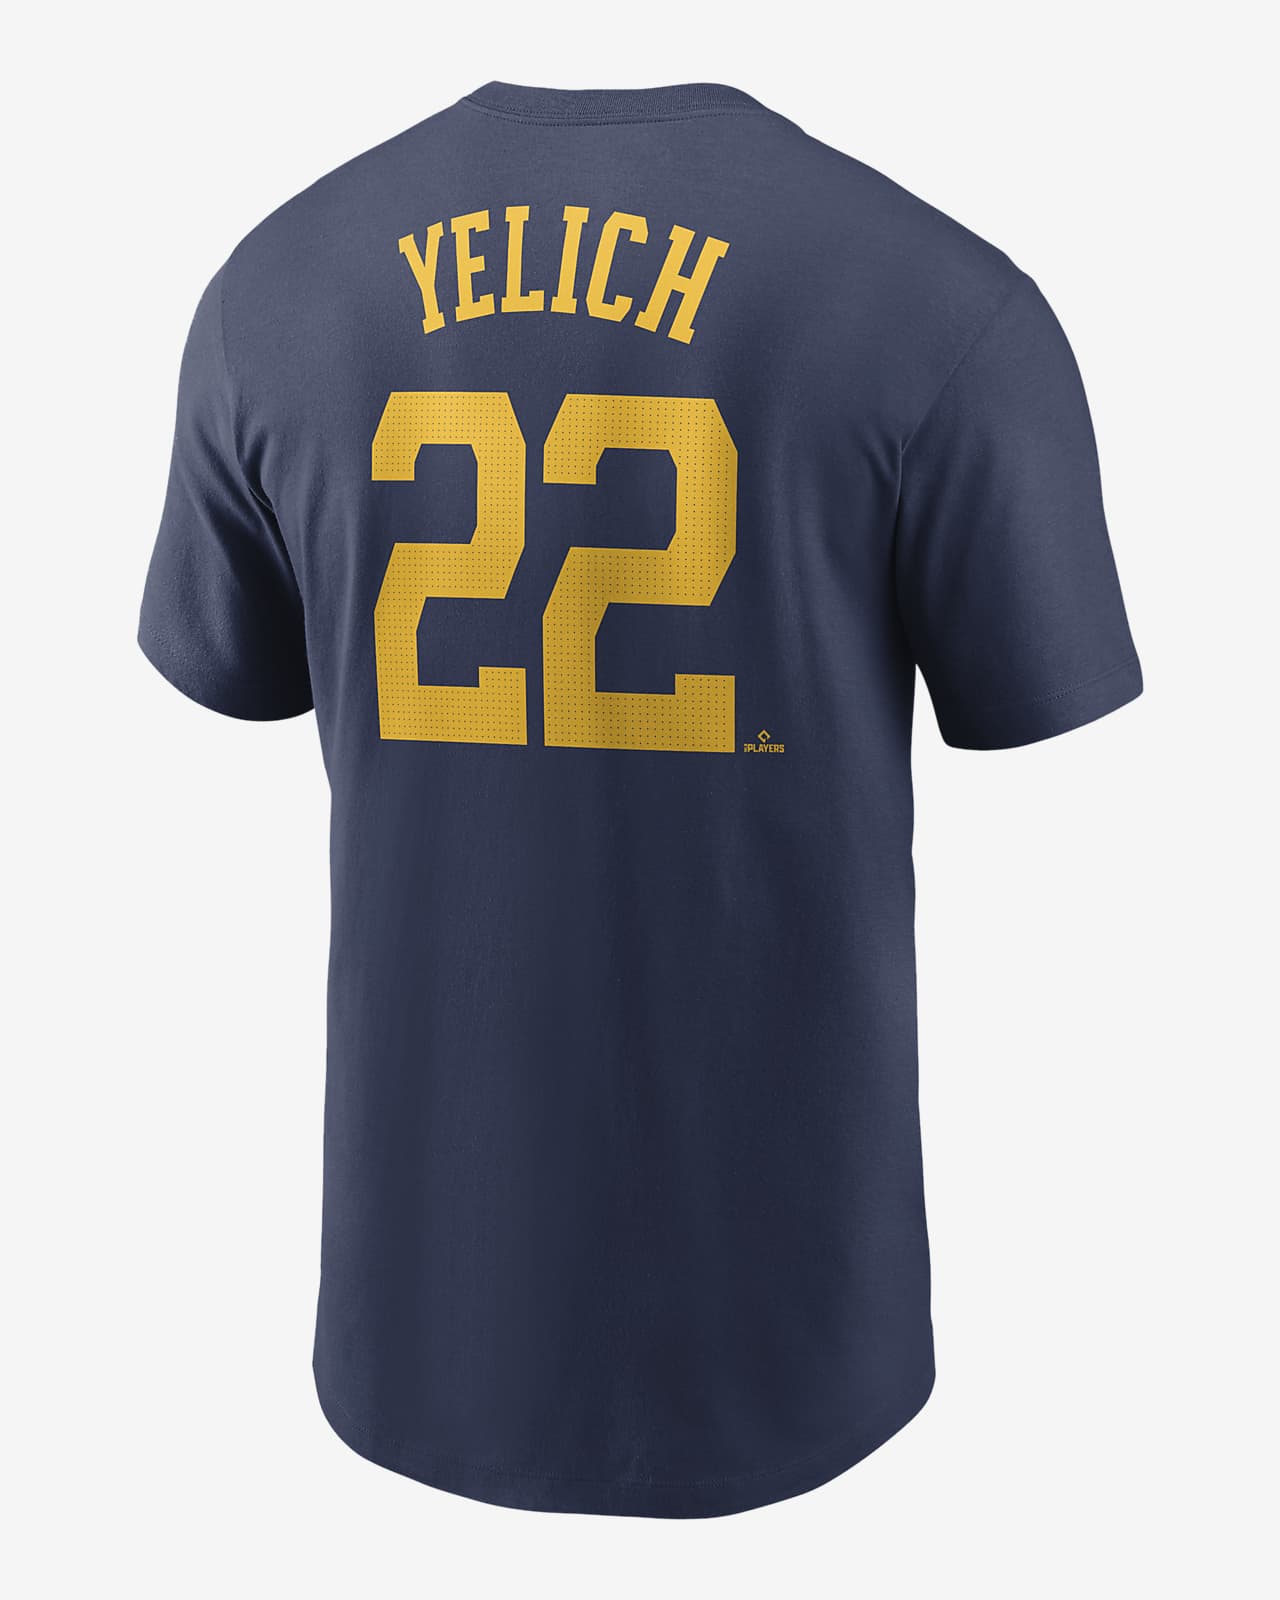 Playera Nike de la MLB para hombre Christian Yelich Milwaukee Brewers Fuse.